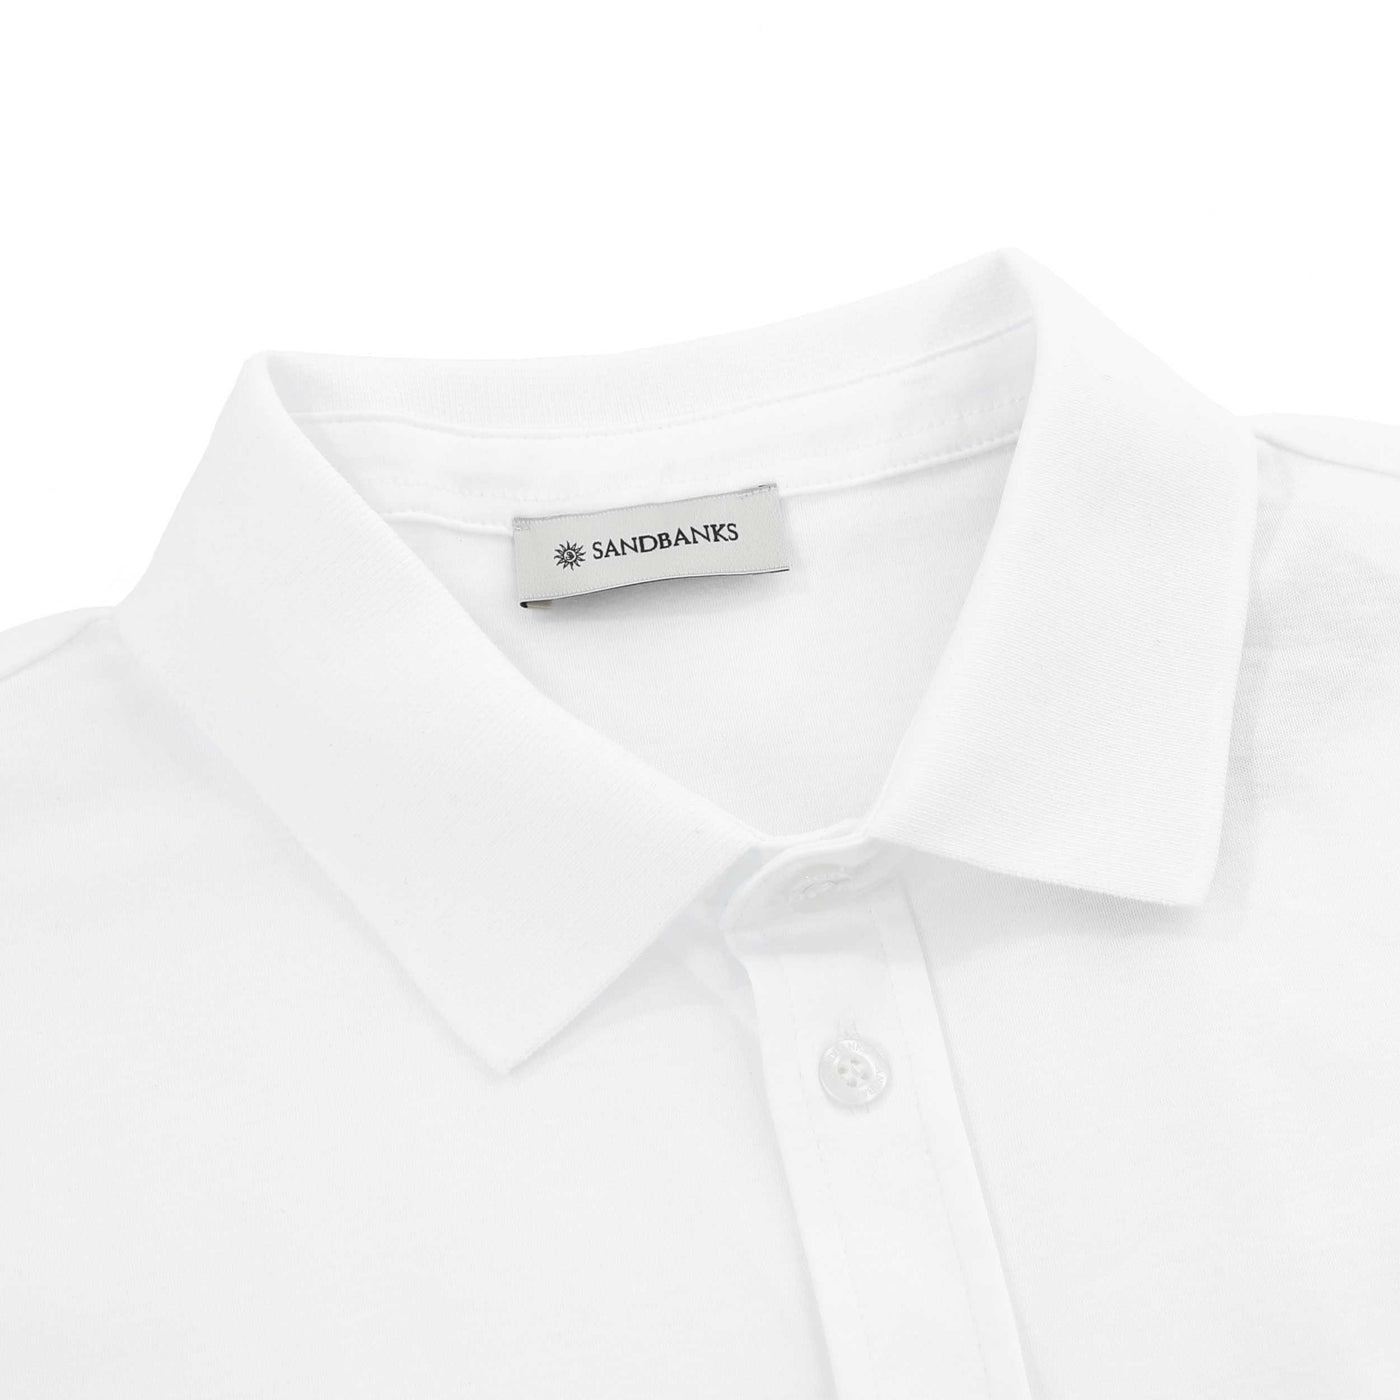 Sandbanks Interlock Full Button Polo Shirt in White Collar